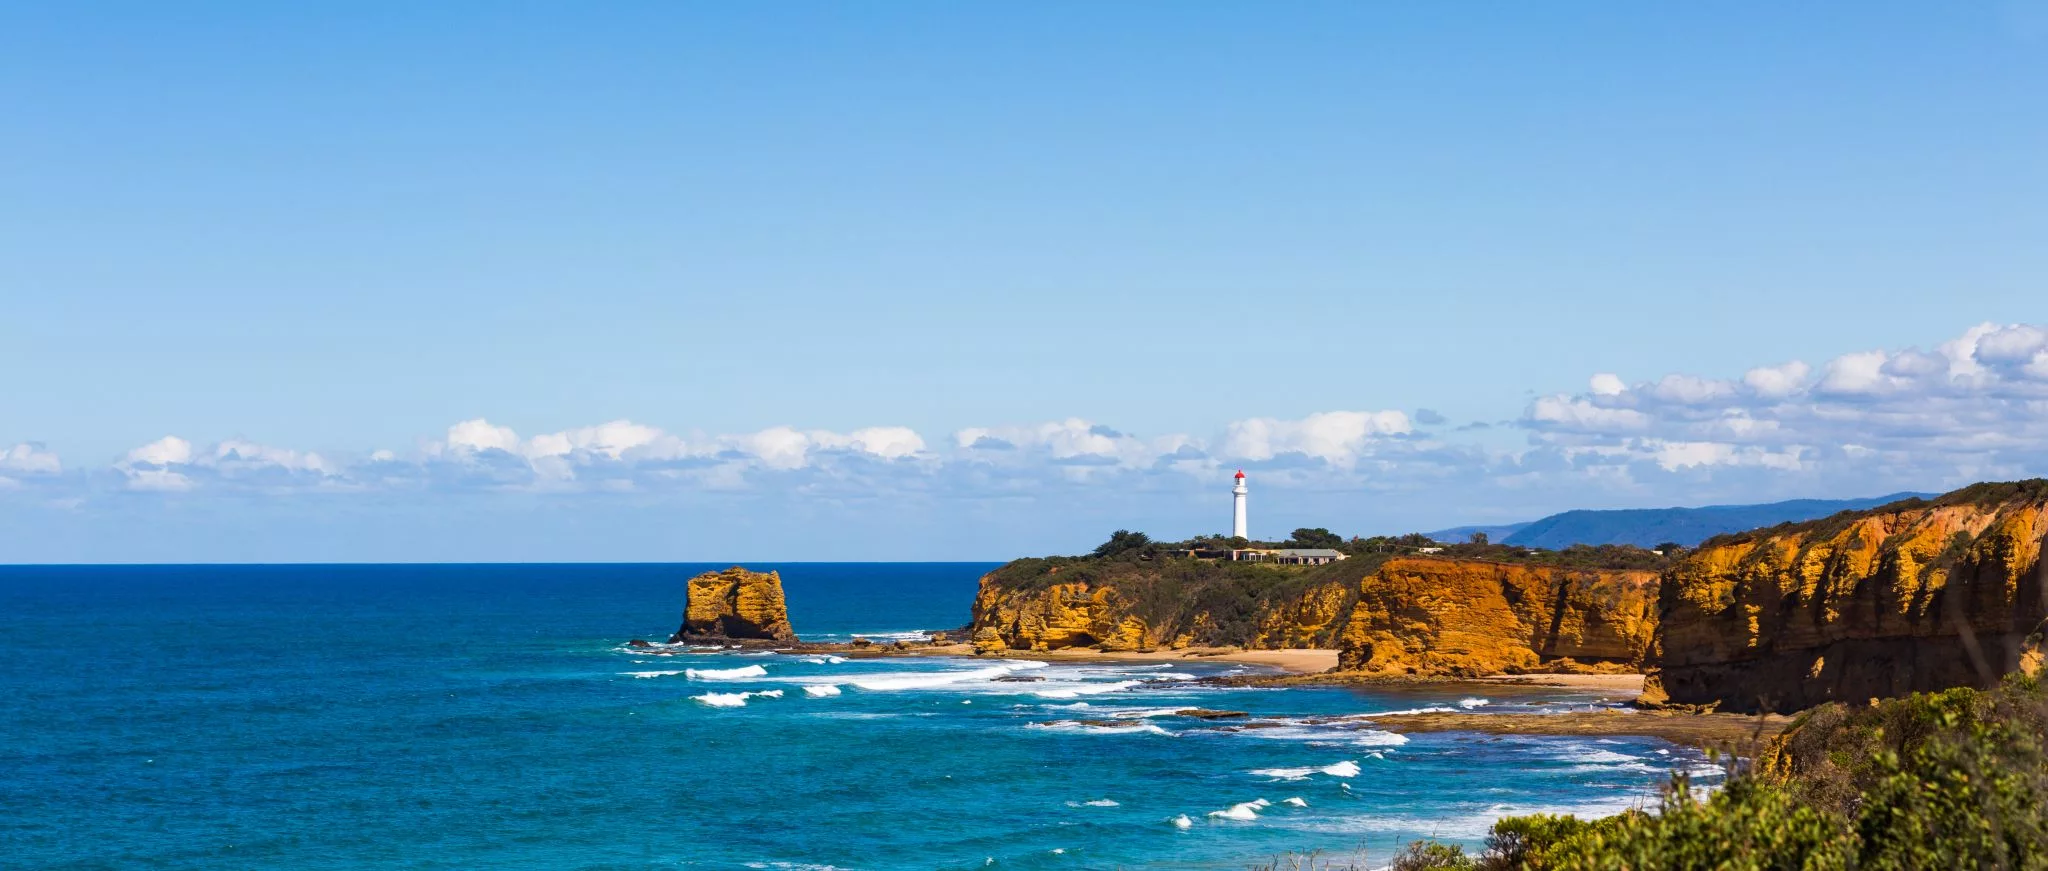 Split Point Lighthouse from Split Point Lookout, Australia